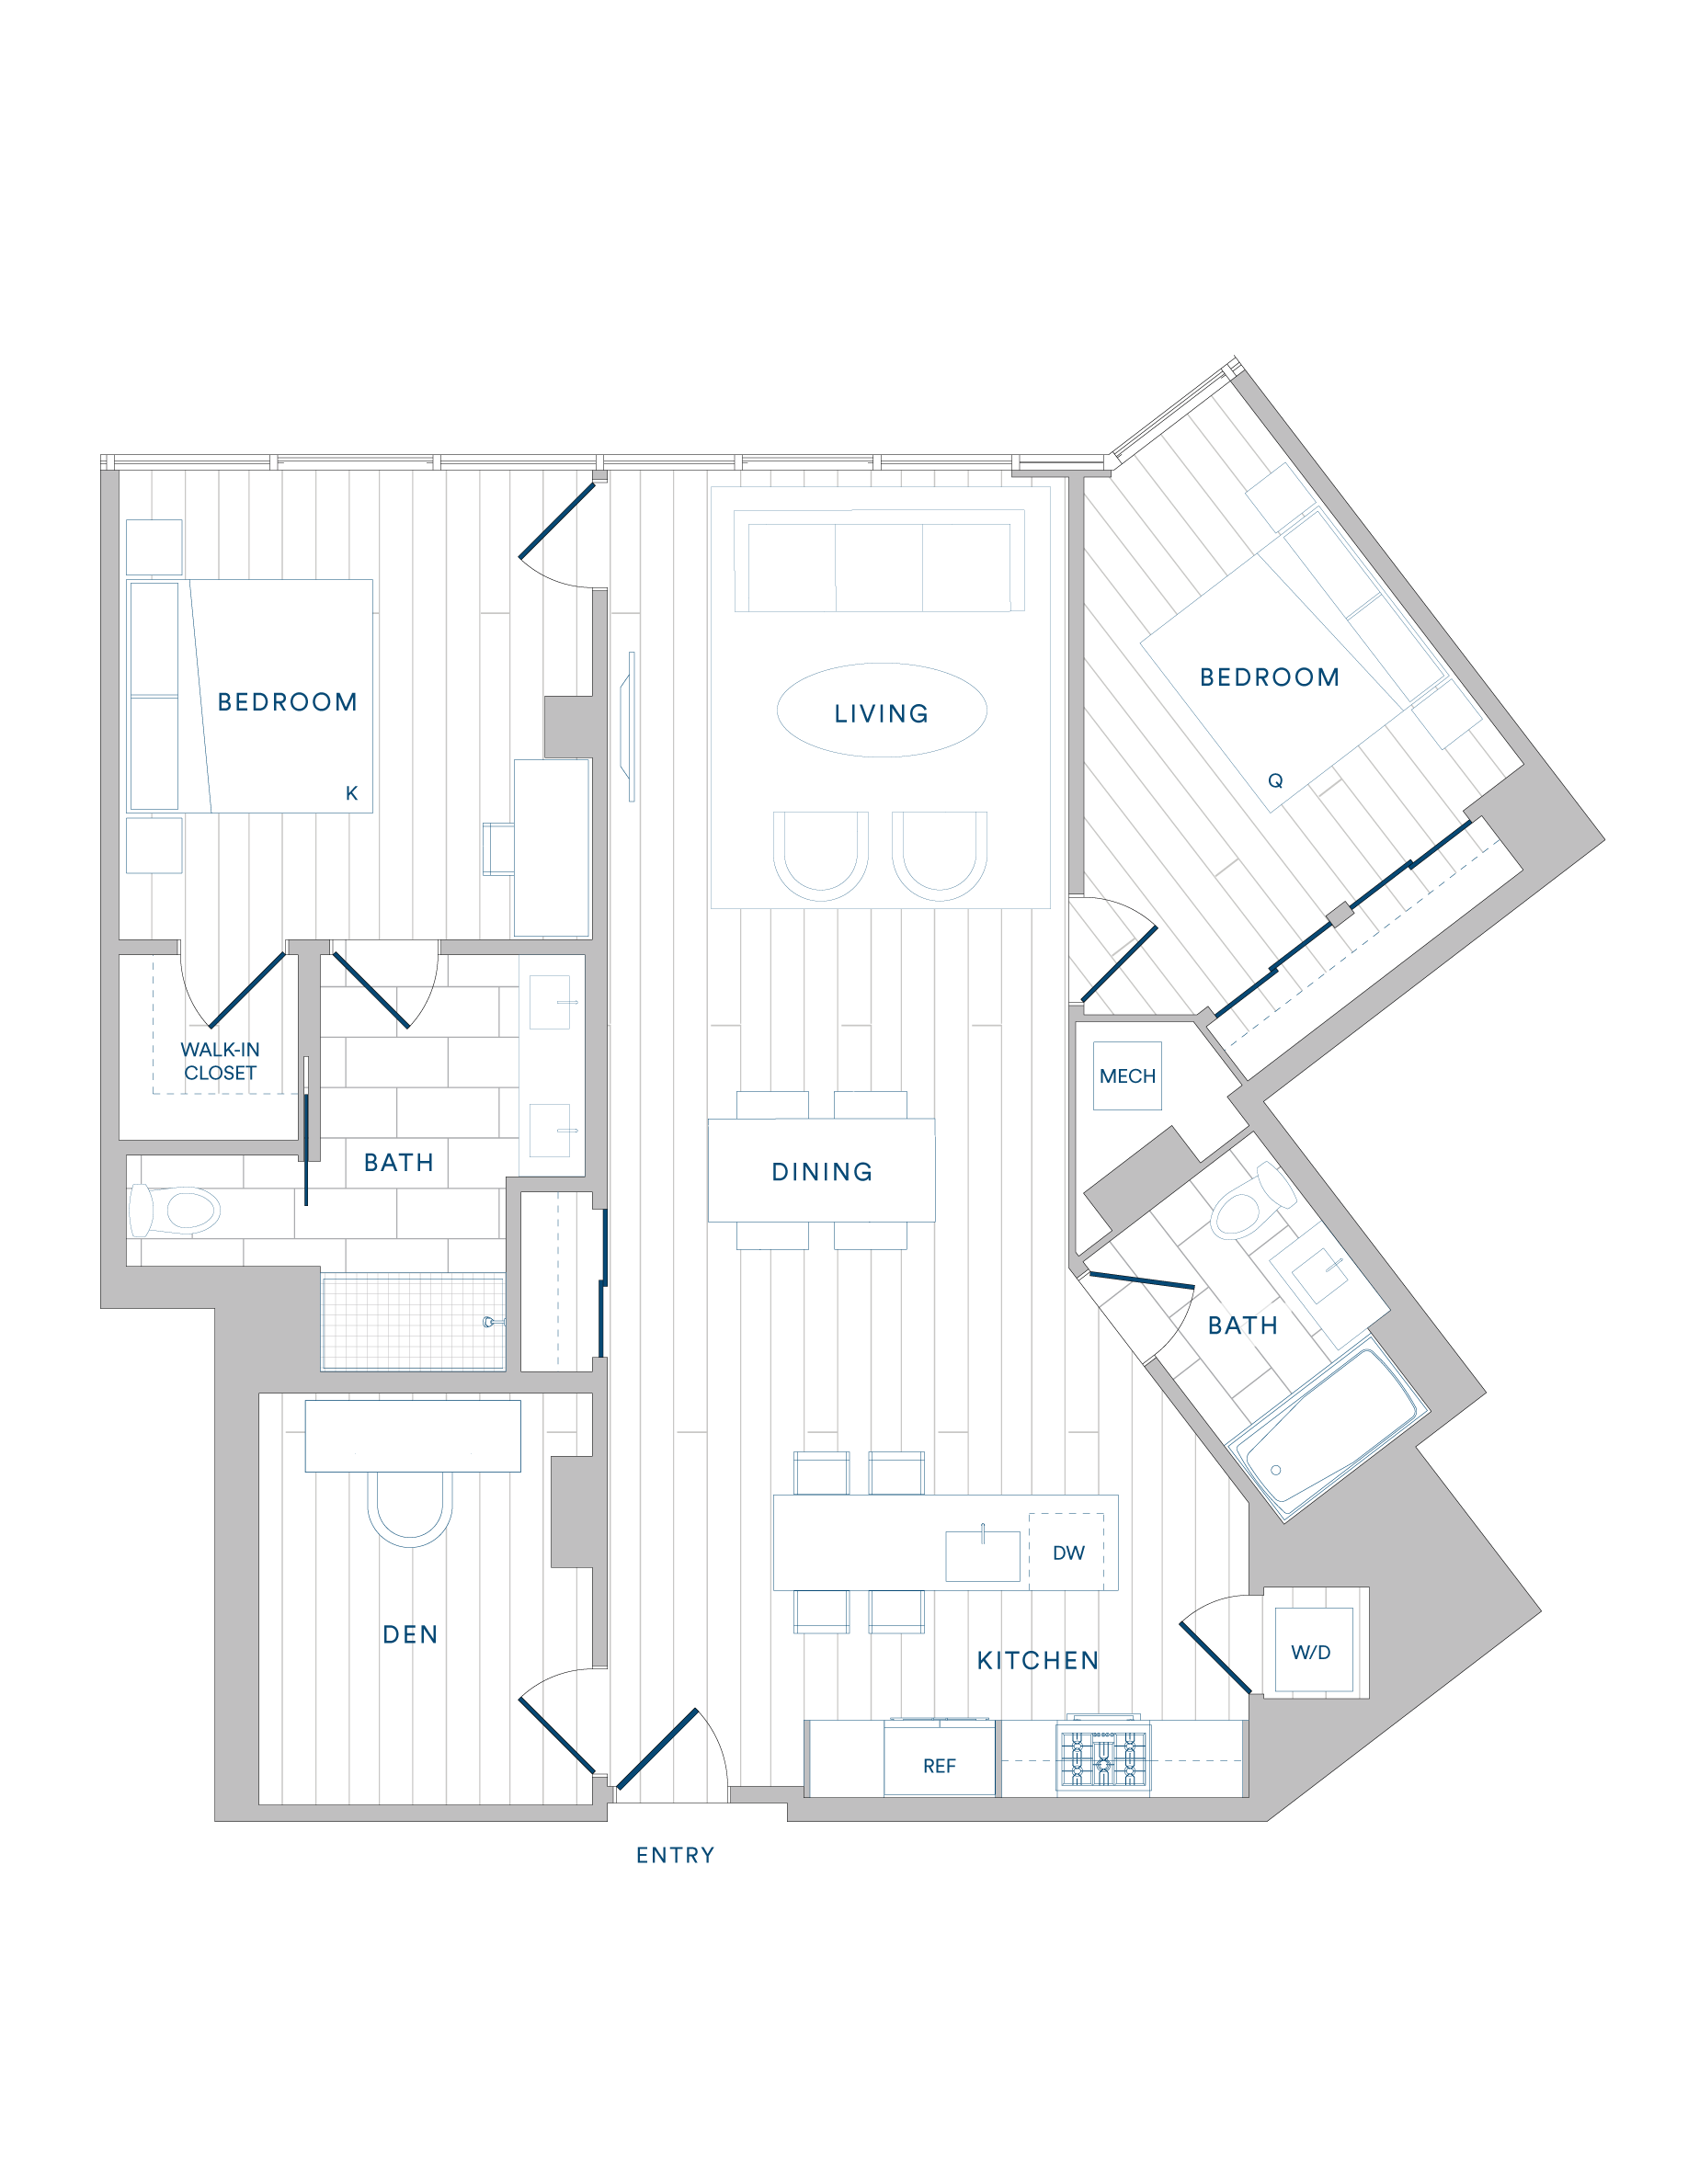 Floorplan for Apartment #1317, 2 bedroom unit at Margarite